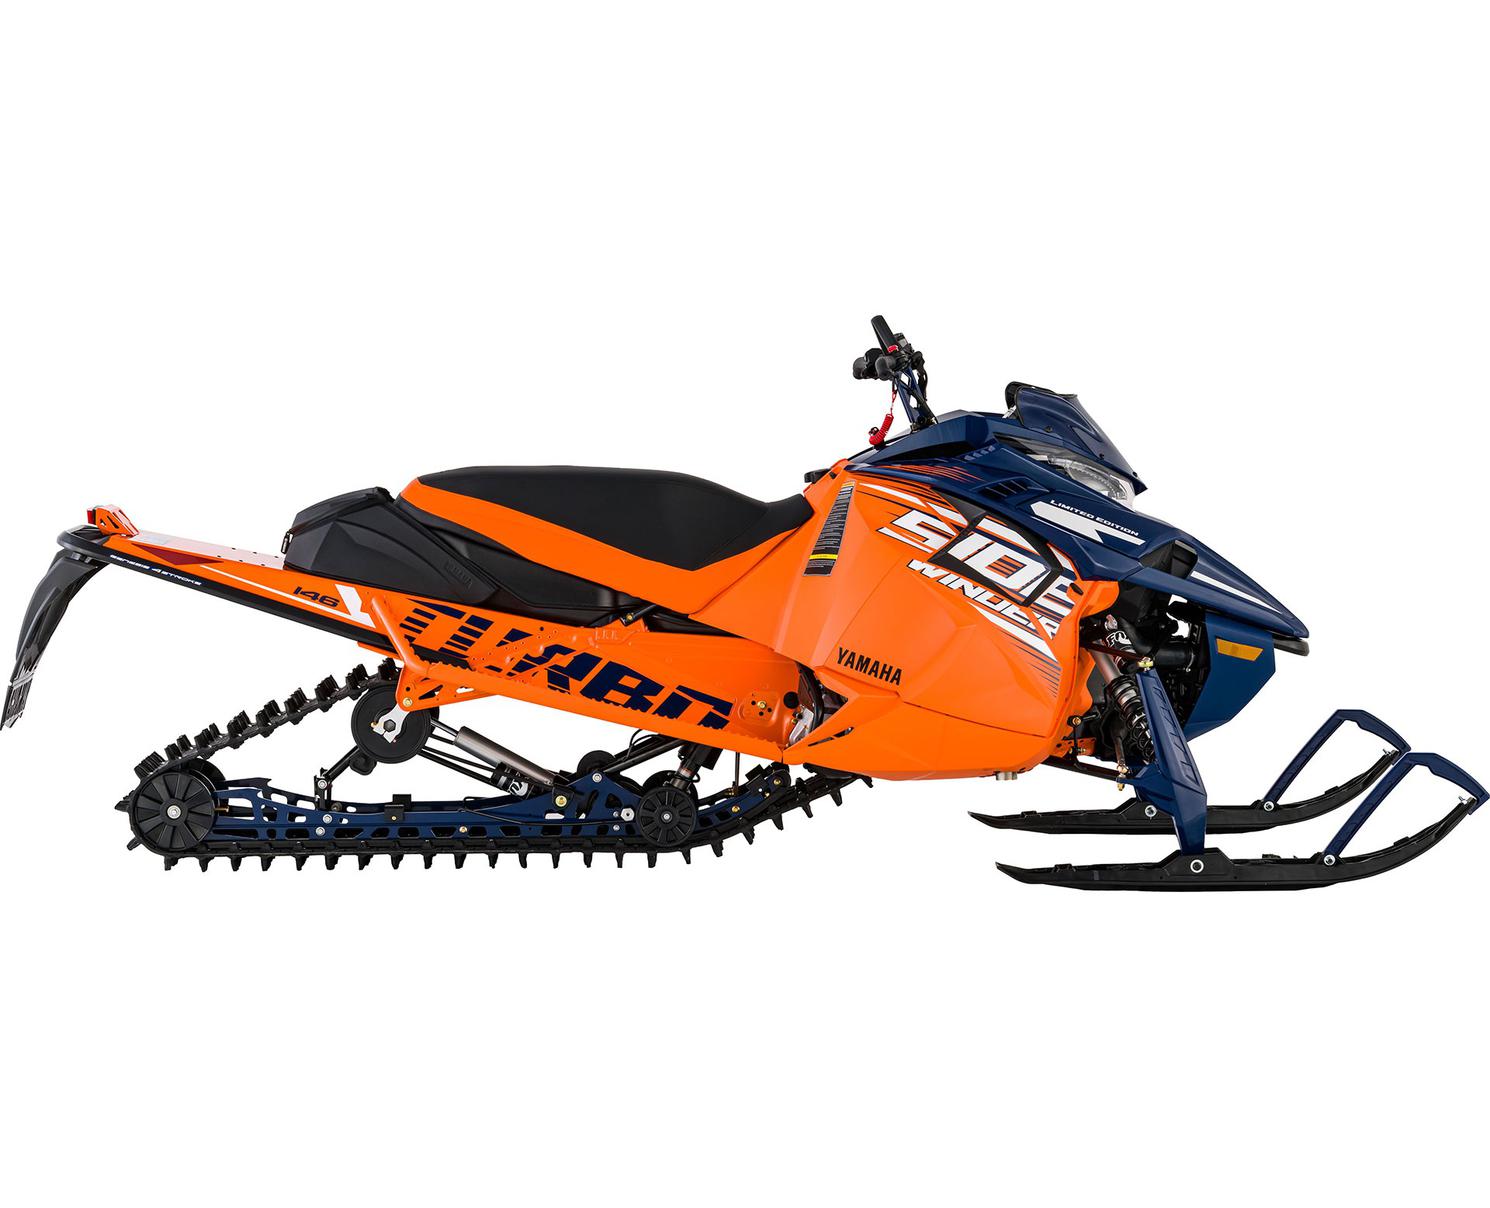 2021 Yamaha Sidewinder X-TX LE Ink Blue/Orange